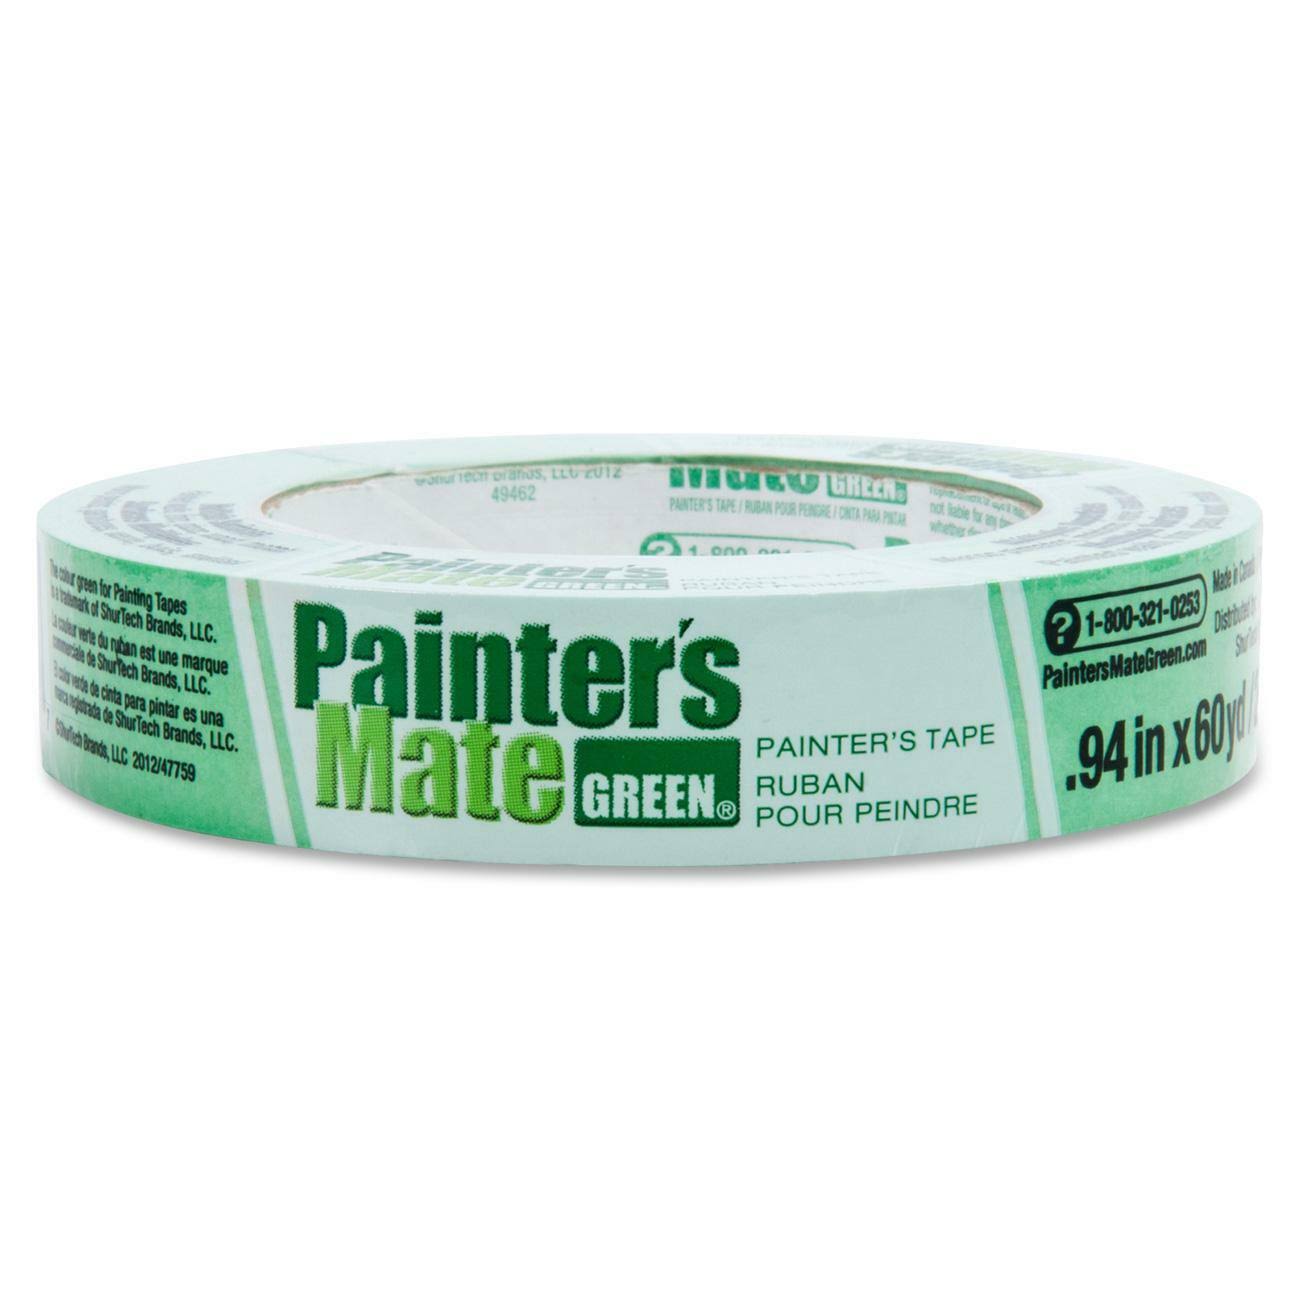 Painter's Mate Green Masking Tape - 0.94" x 60yds